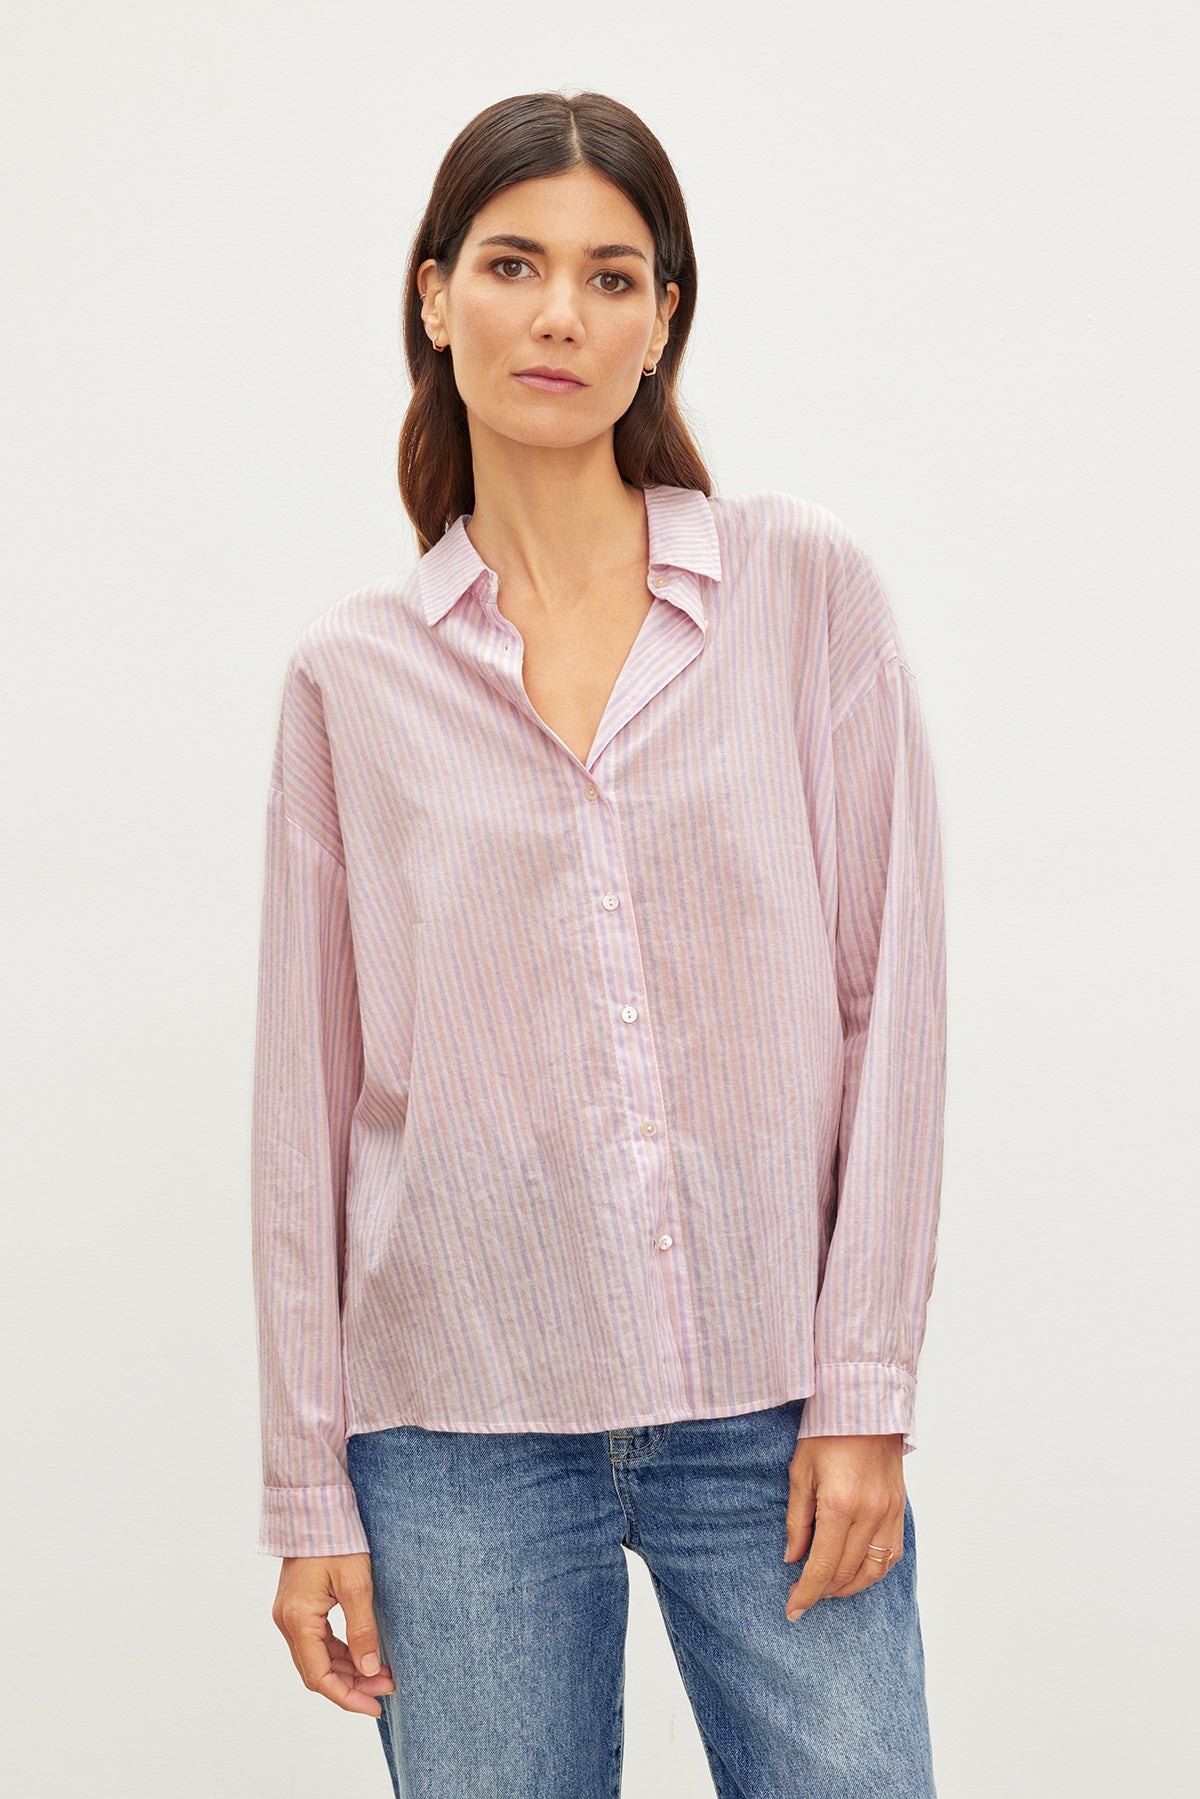 Velvet Ashlyn Printed Striped Button-Up Shirt